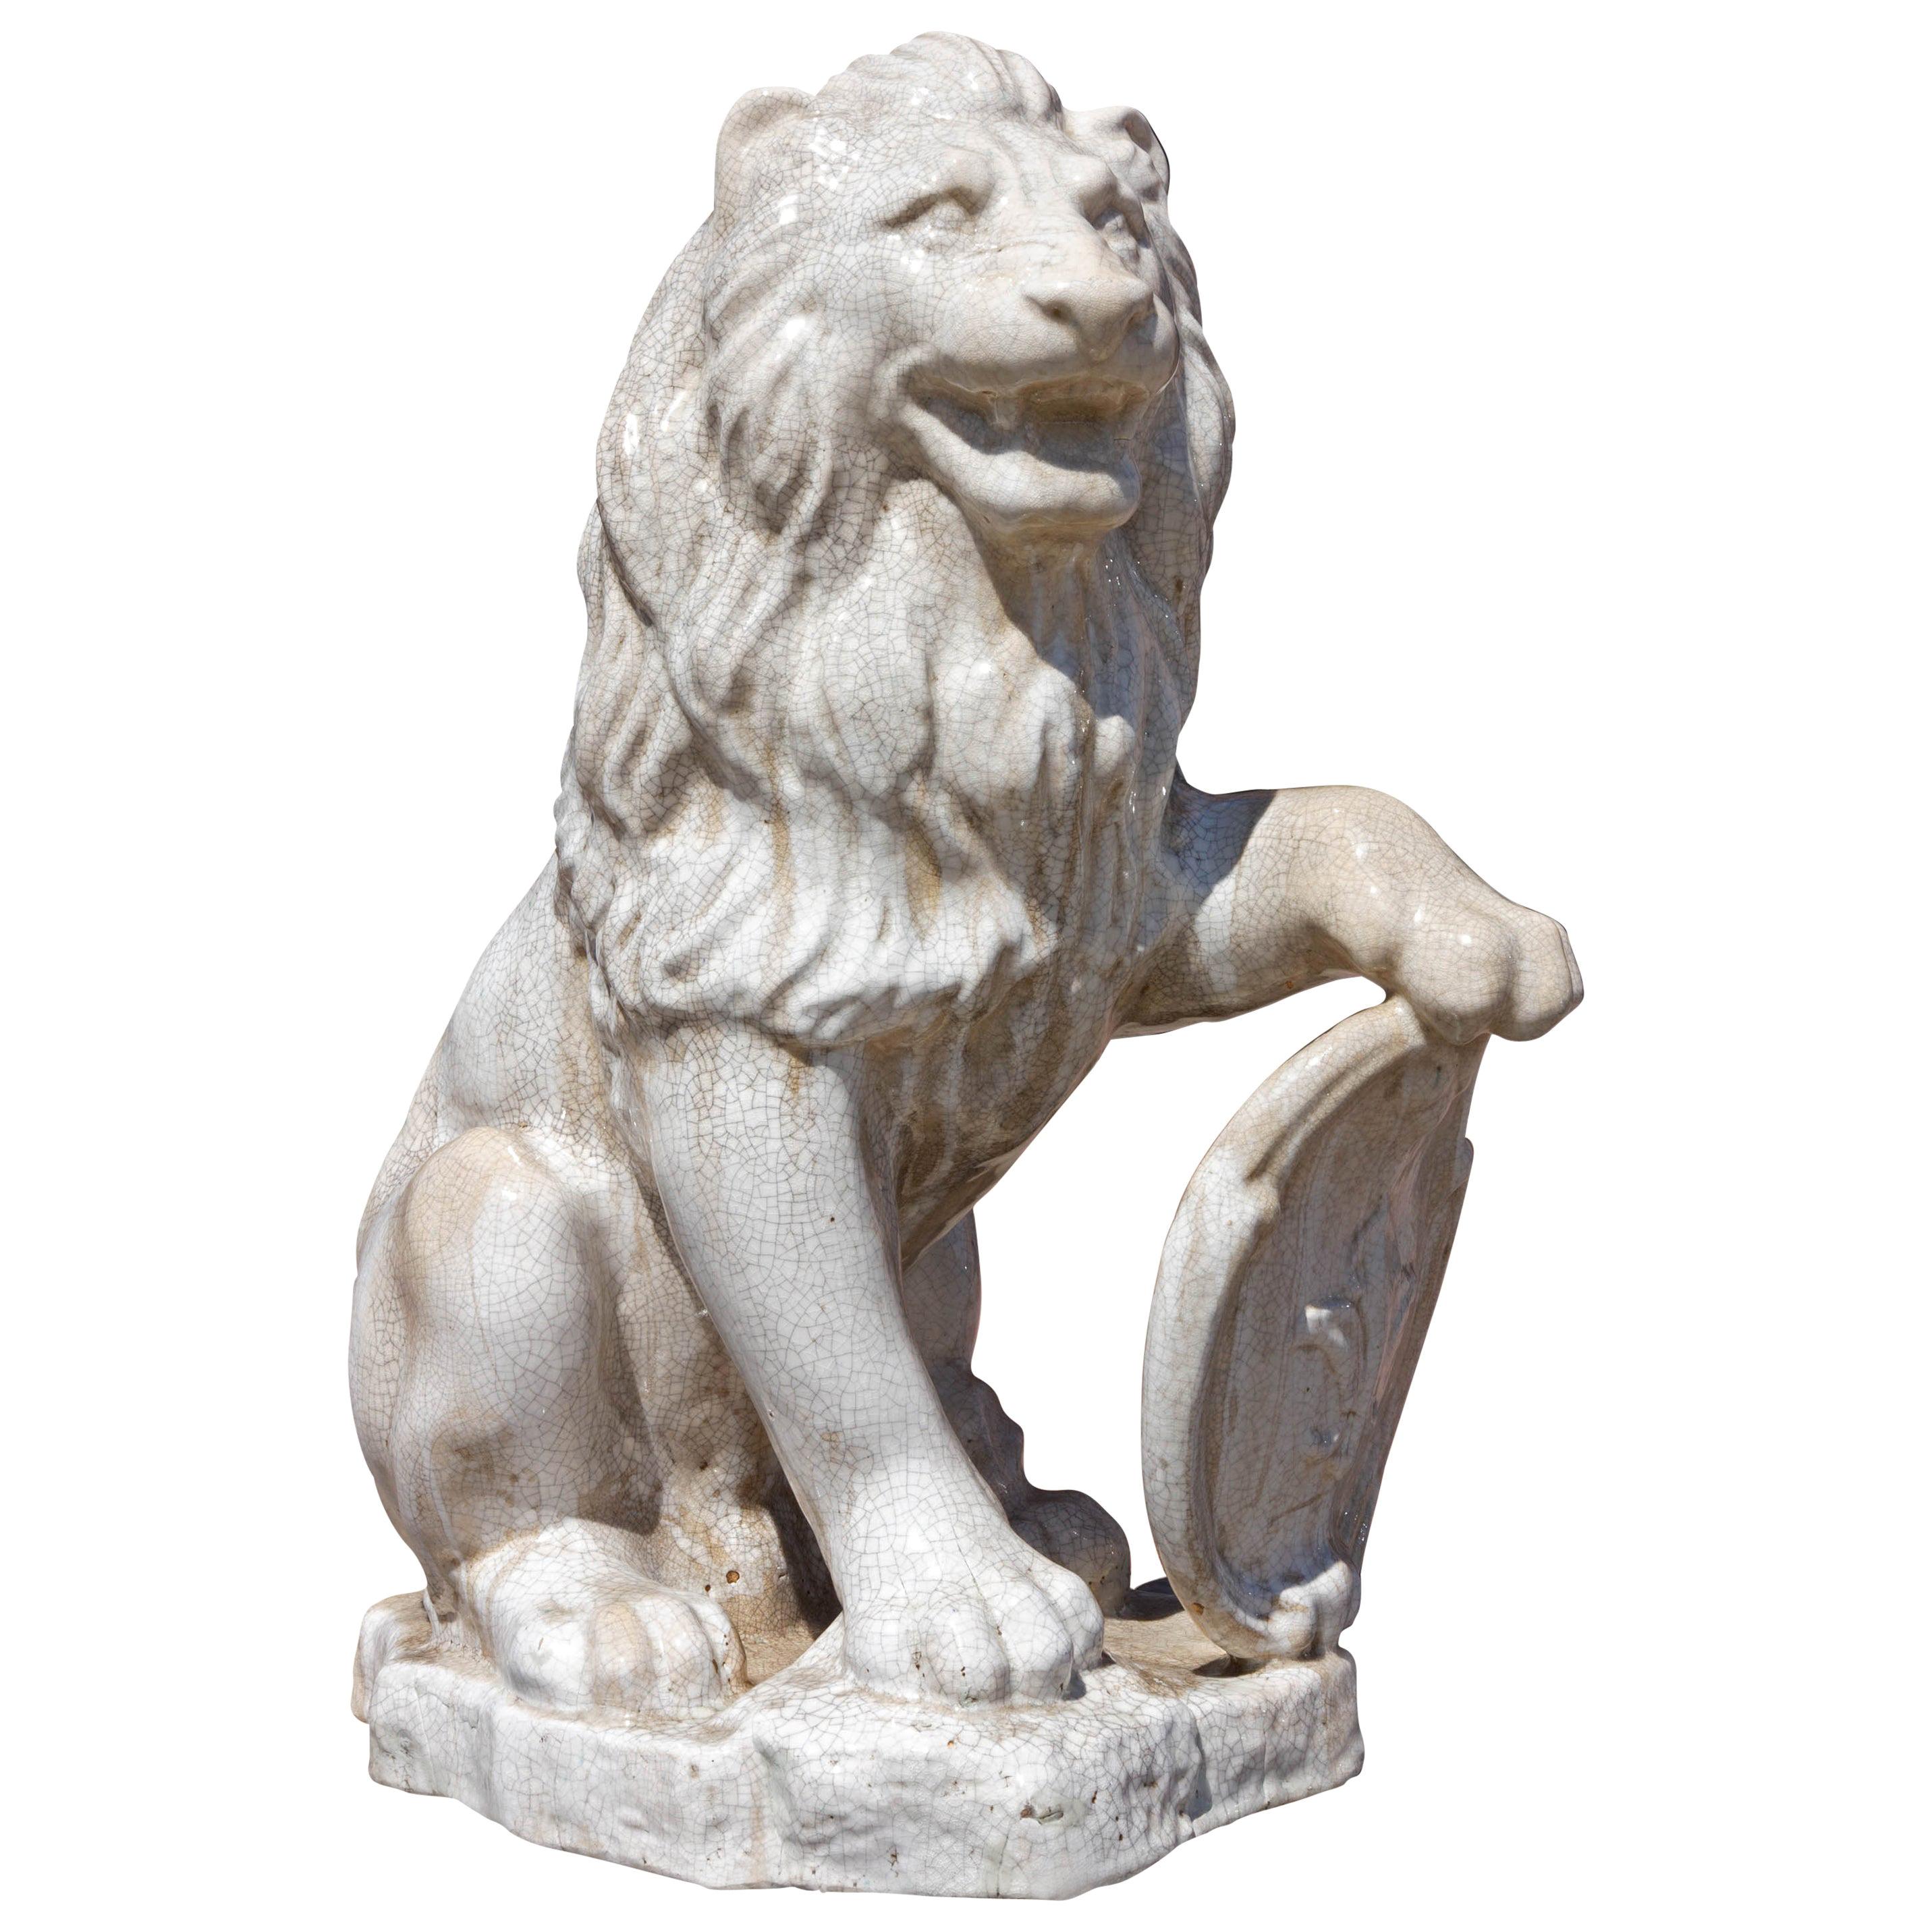 Majolica Seated Garden Lion Sculpture with Heraldic Shield